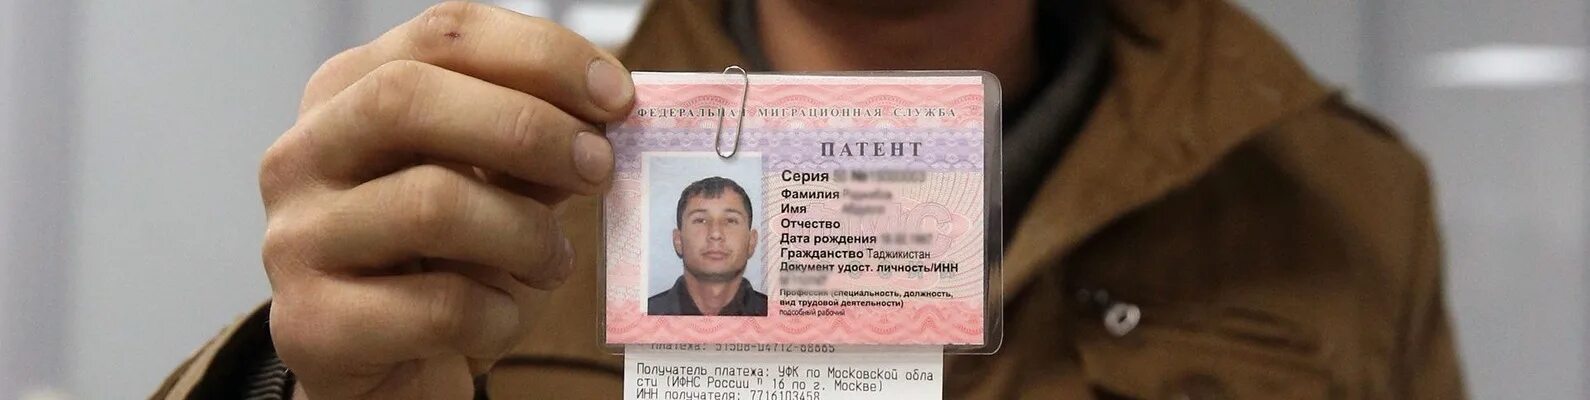 Гражданам таджикистана нужен патент. Патент для мигрантов. Патент для иностранных граждан. Патент фото. Патент для иностранных граждан Таджикистана.